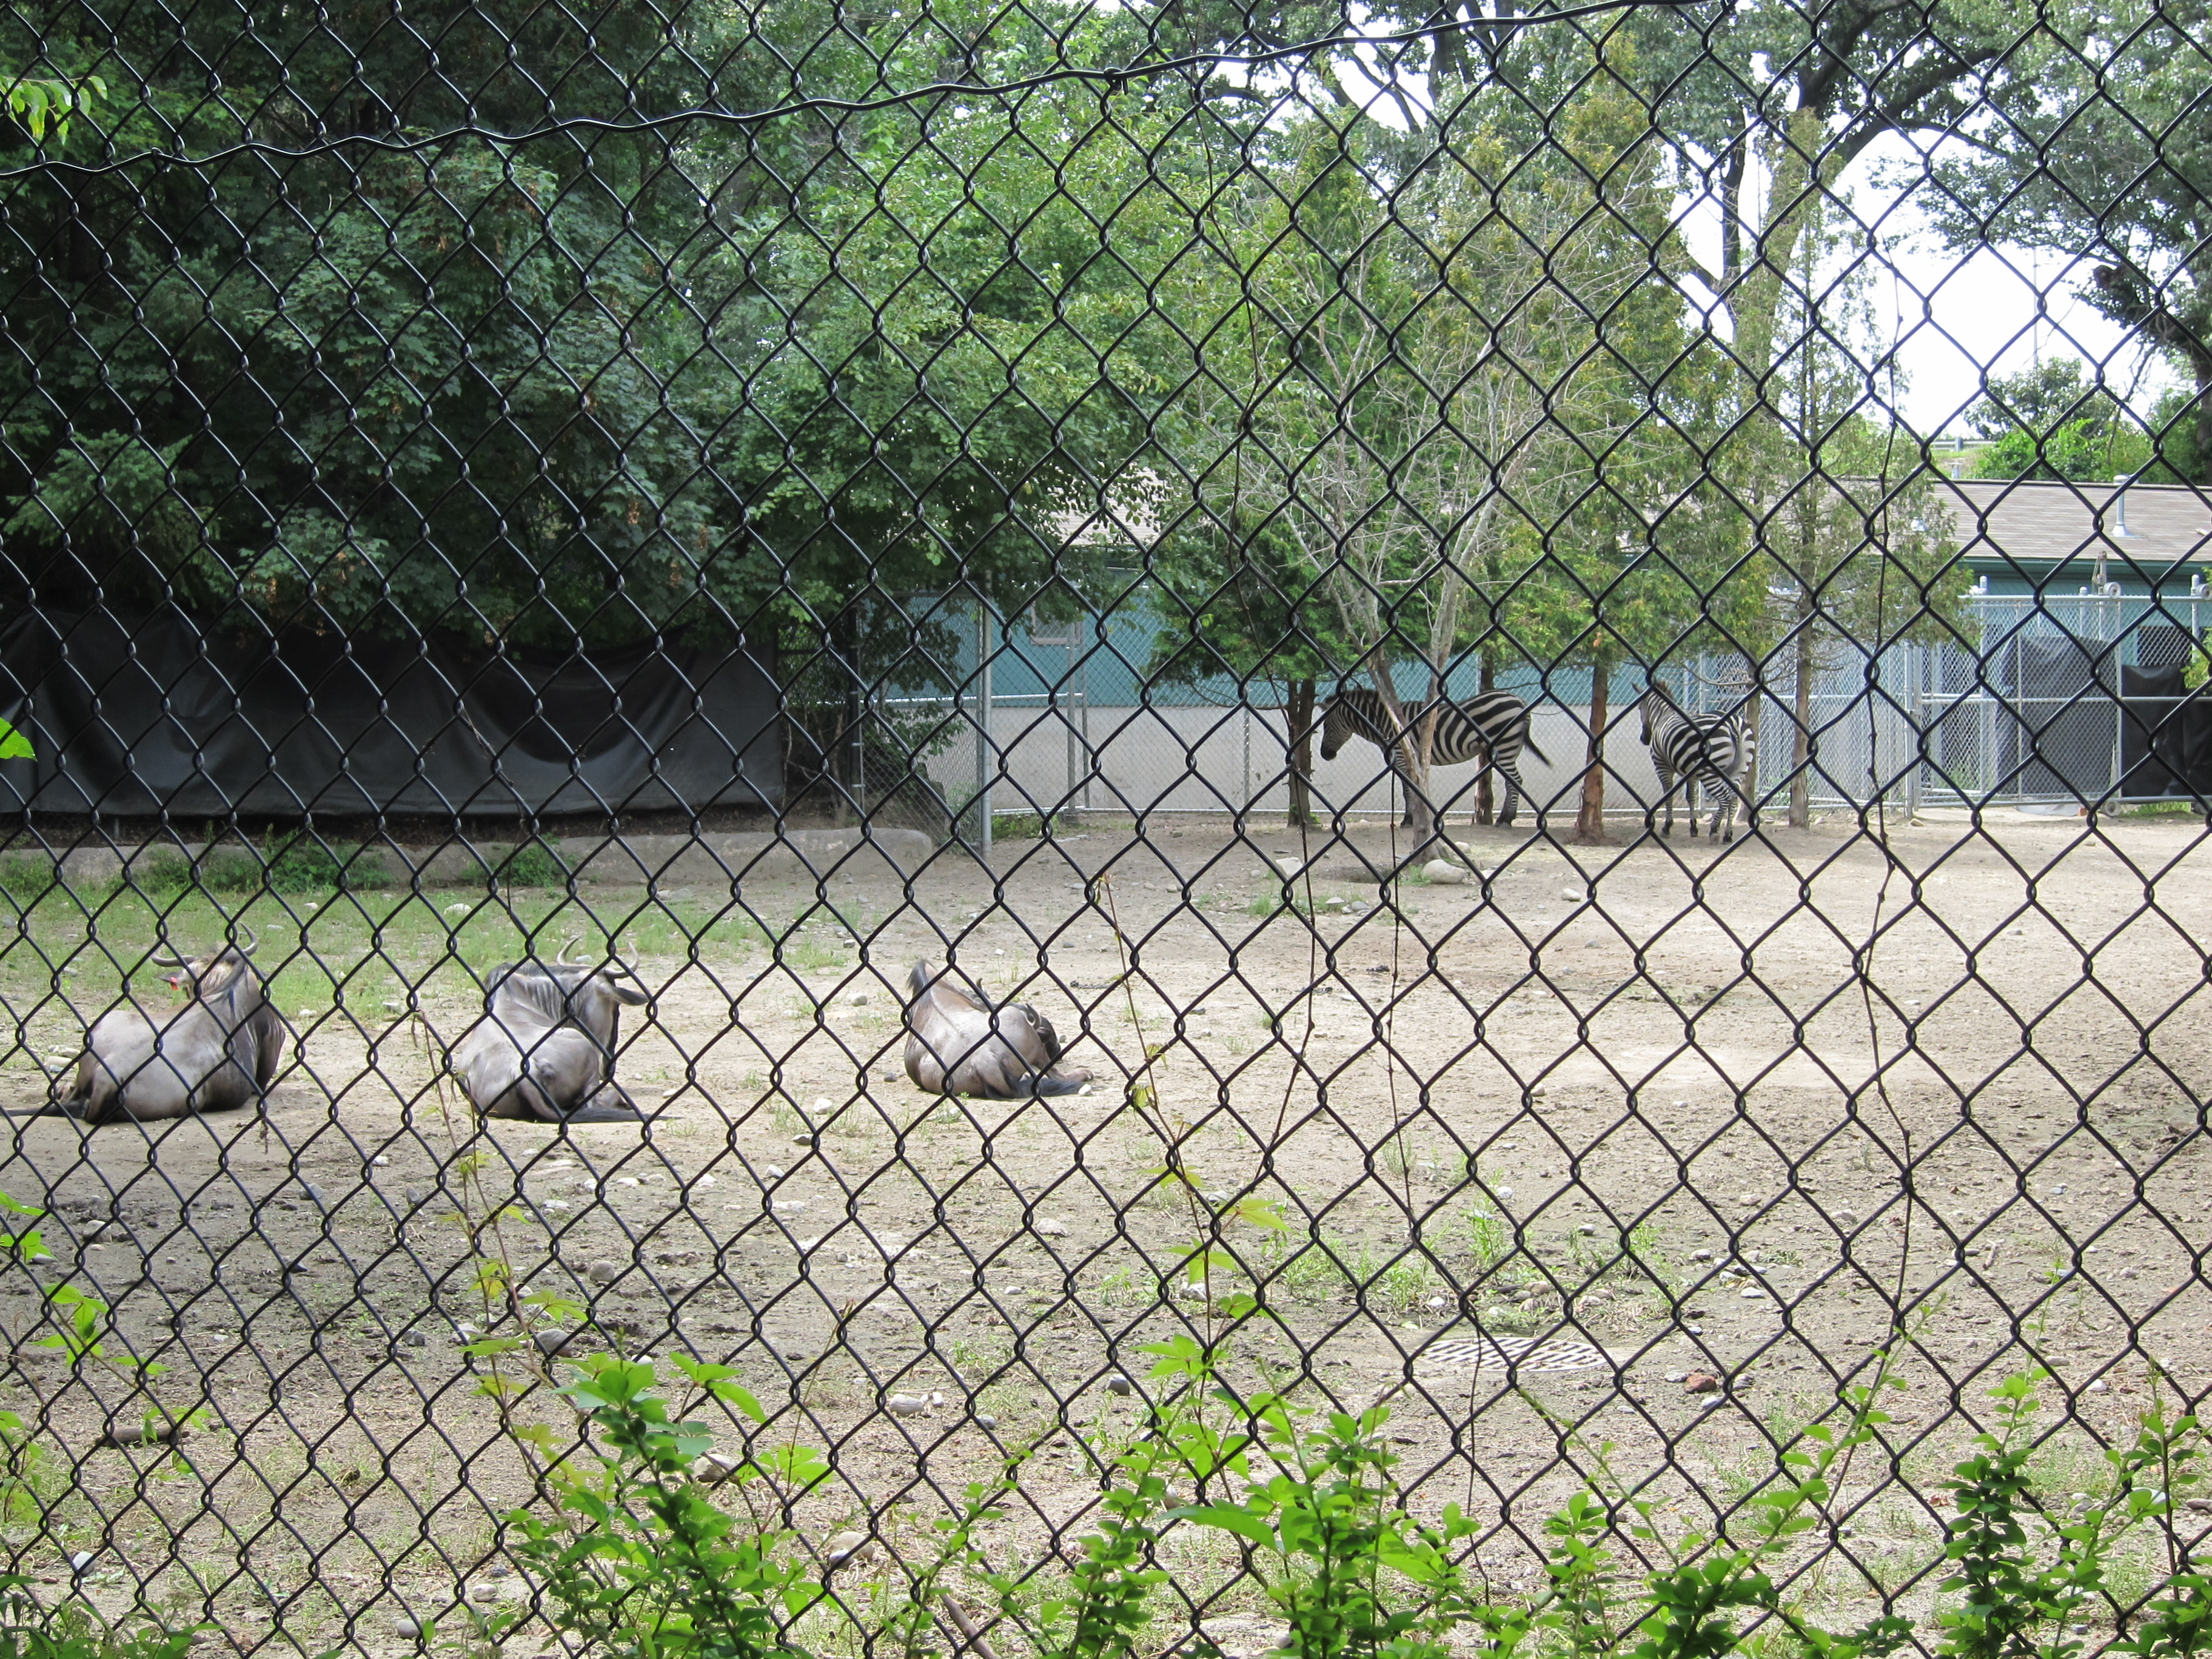 Zebras at Roger Williams Park Zoo